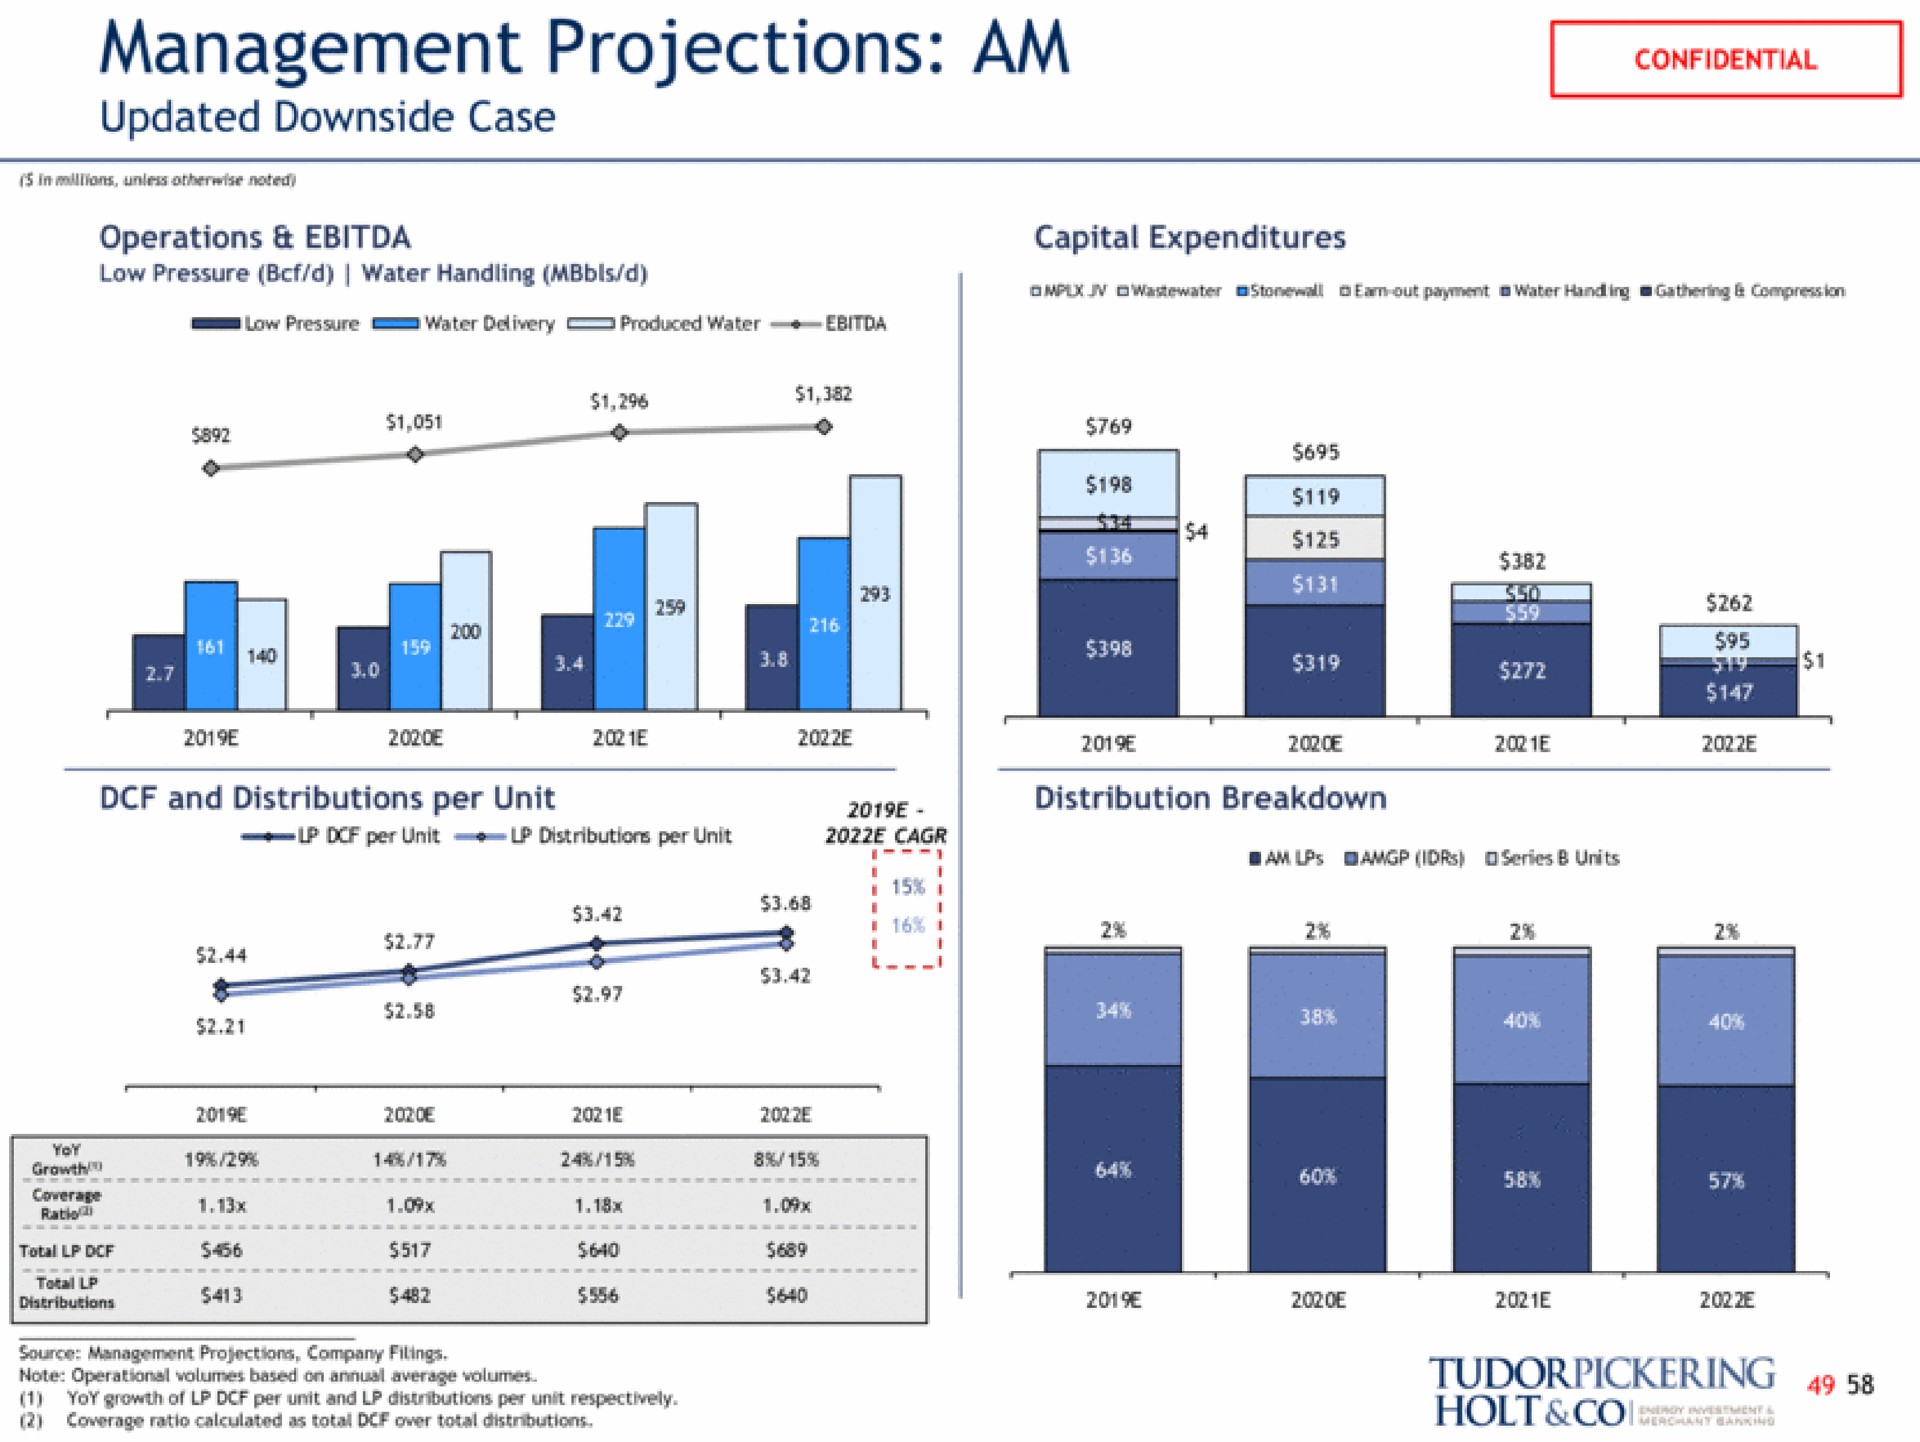 management projections updated downside case am holt | Tudor, Pickering, Holt & Co